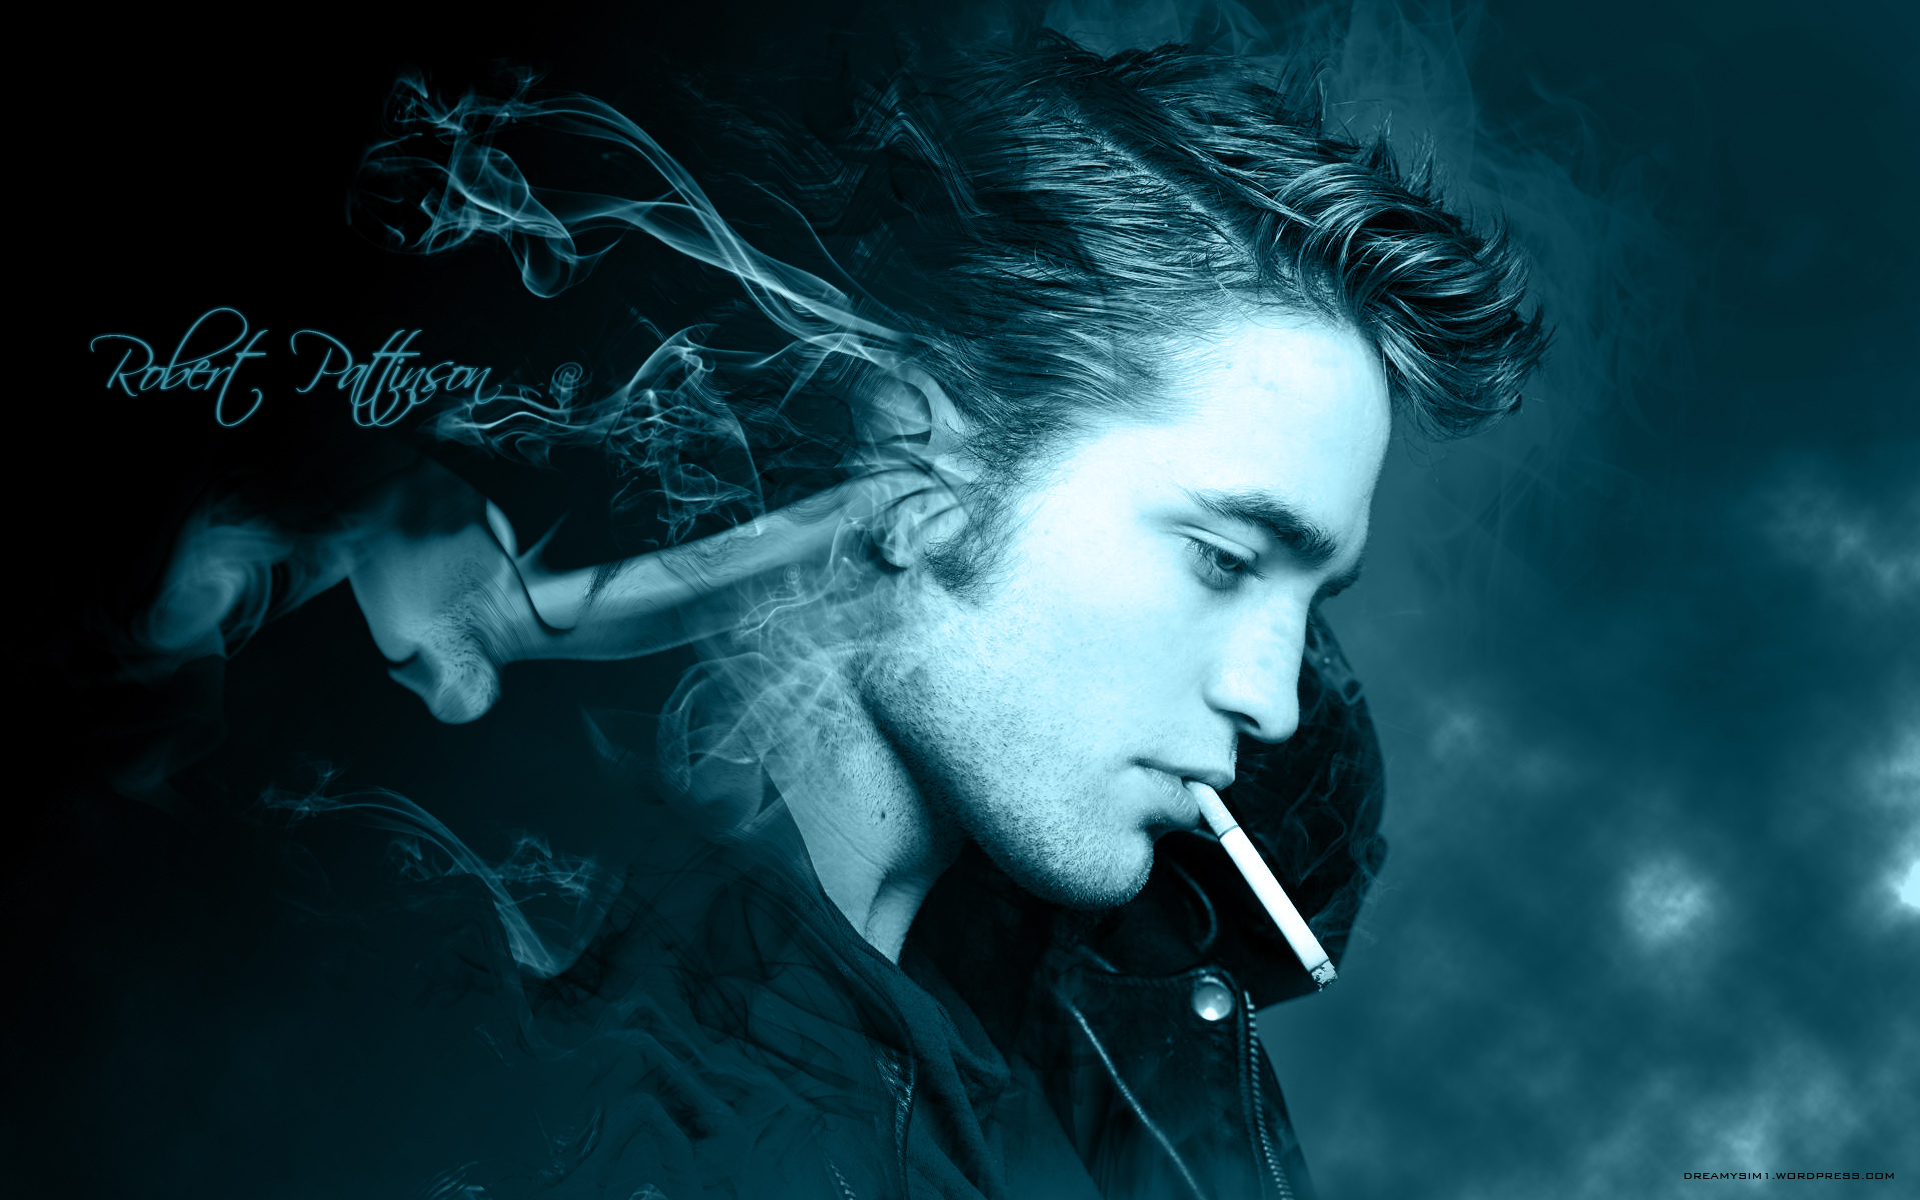 Robert Pattinson Wallpaper Smokin In My Dreams